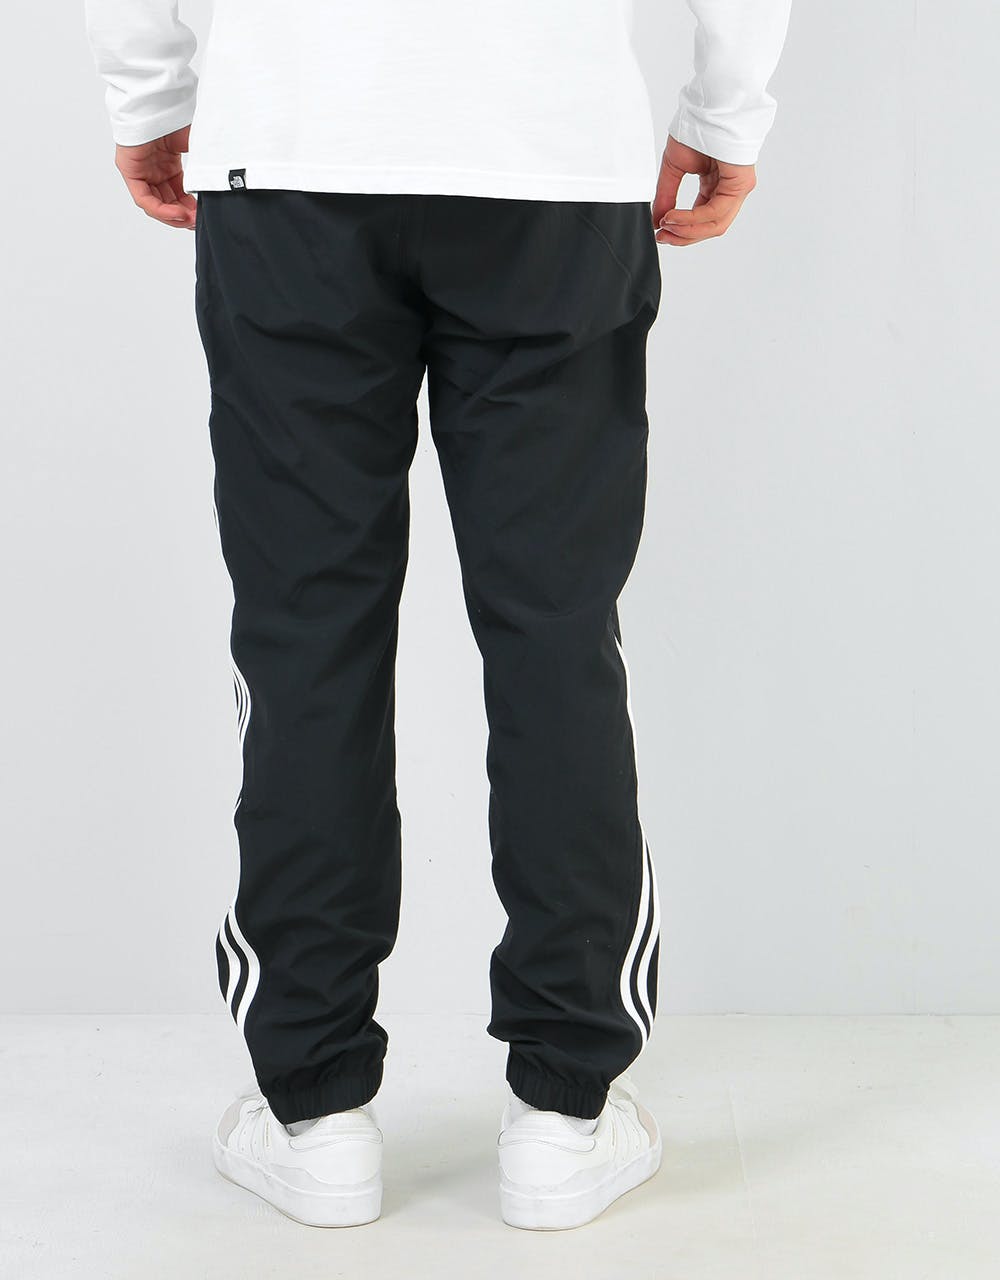 Adidas Standard Wind Pant - Black/White